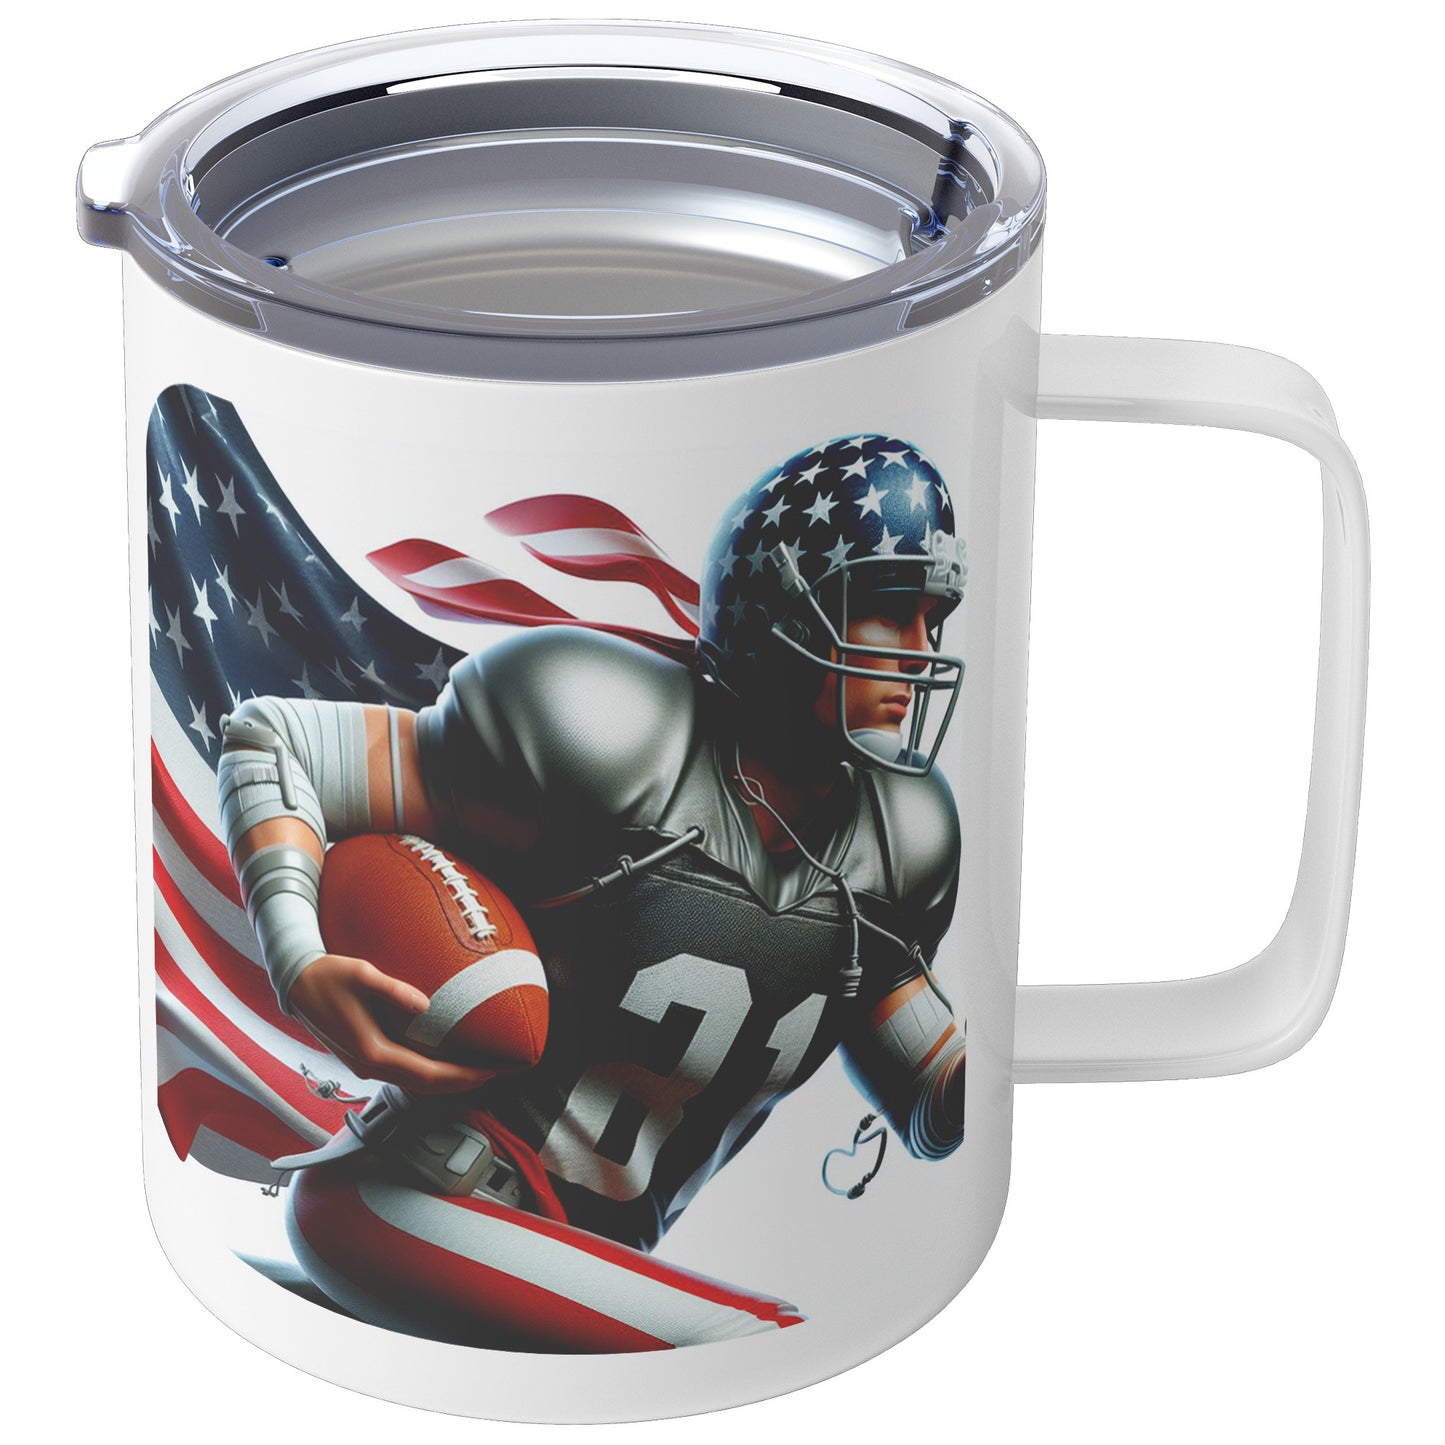 Man Football Player - Insulated Coffee Mug #40